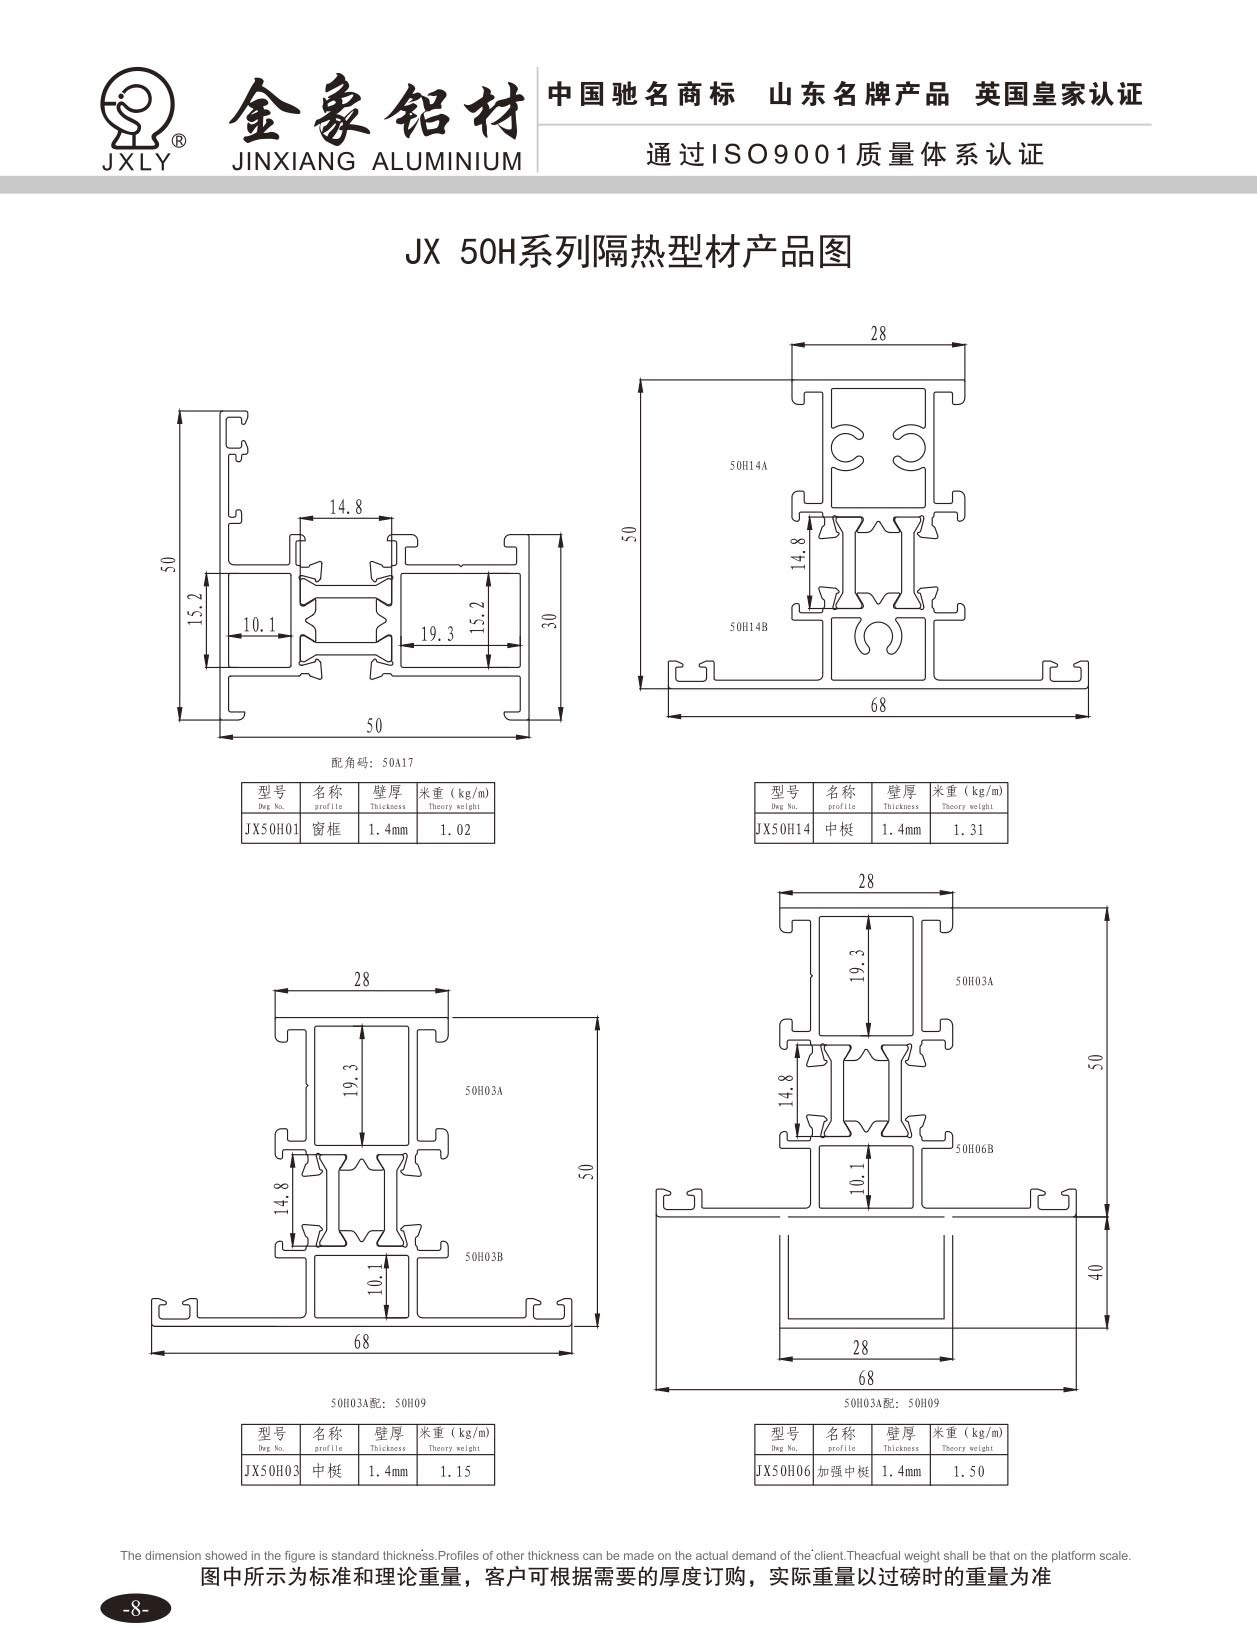 Jx50H系列隔热型材产品图